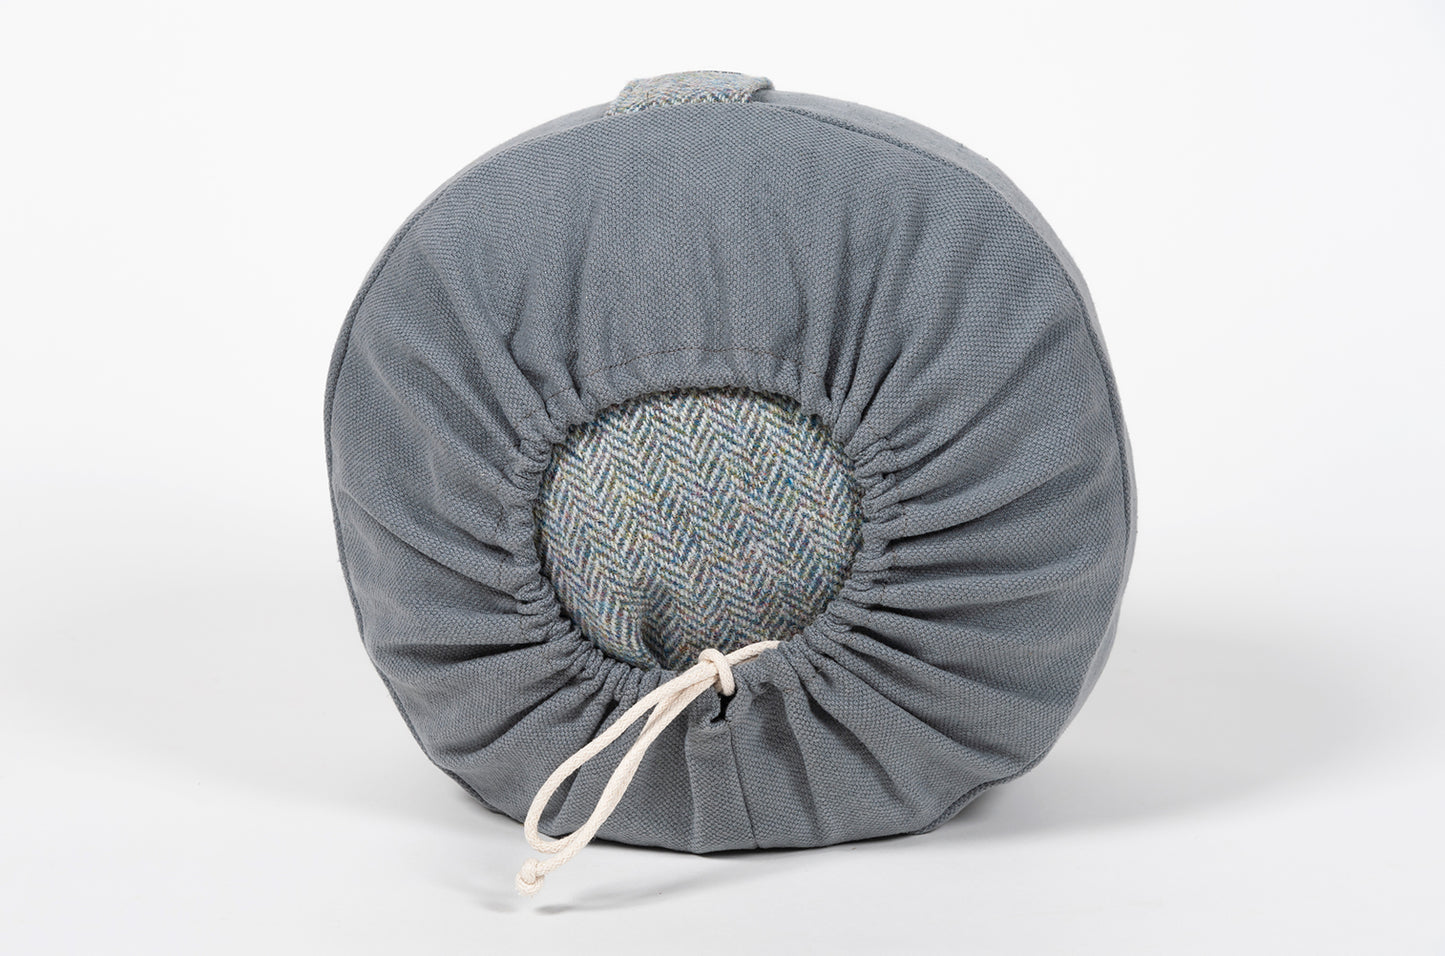 Harris Tweed Spelt Meditation Cushion - Made in the UK